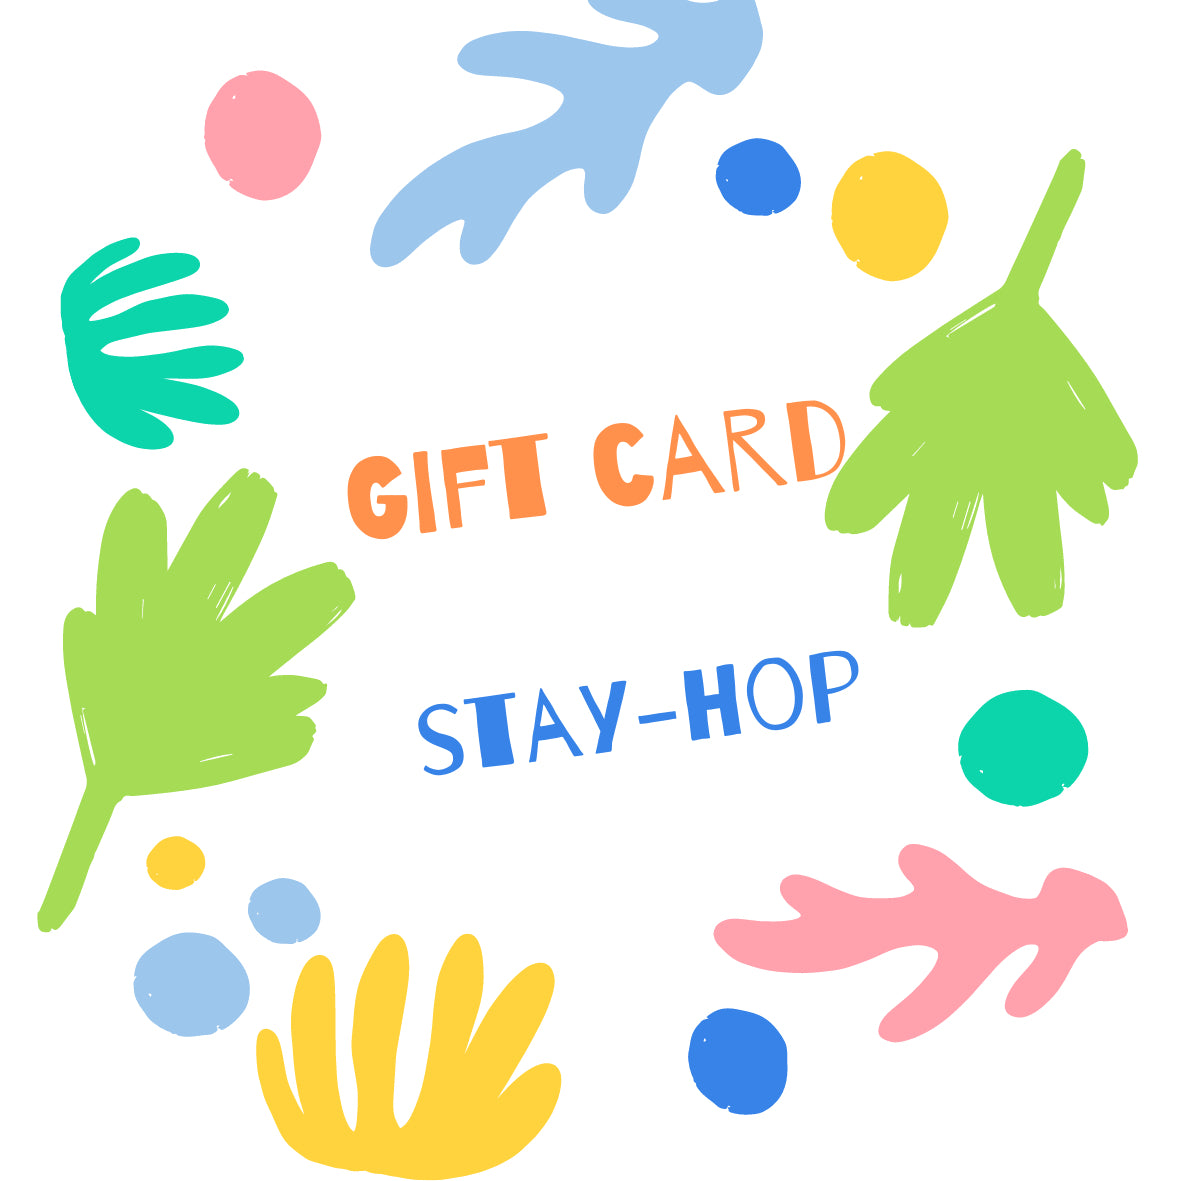 eGift card Stay-hop